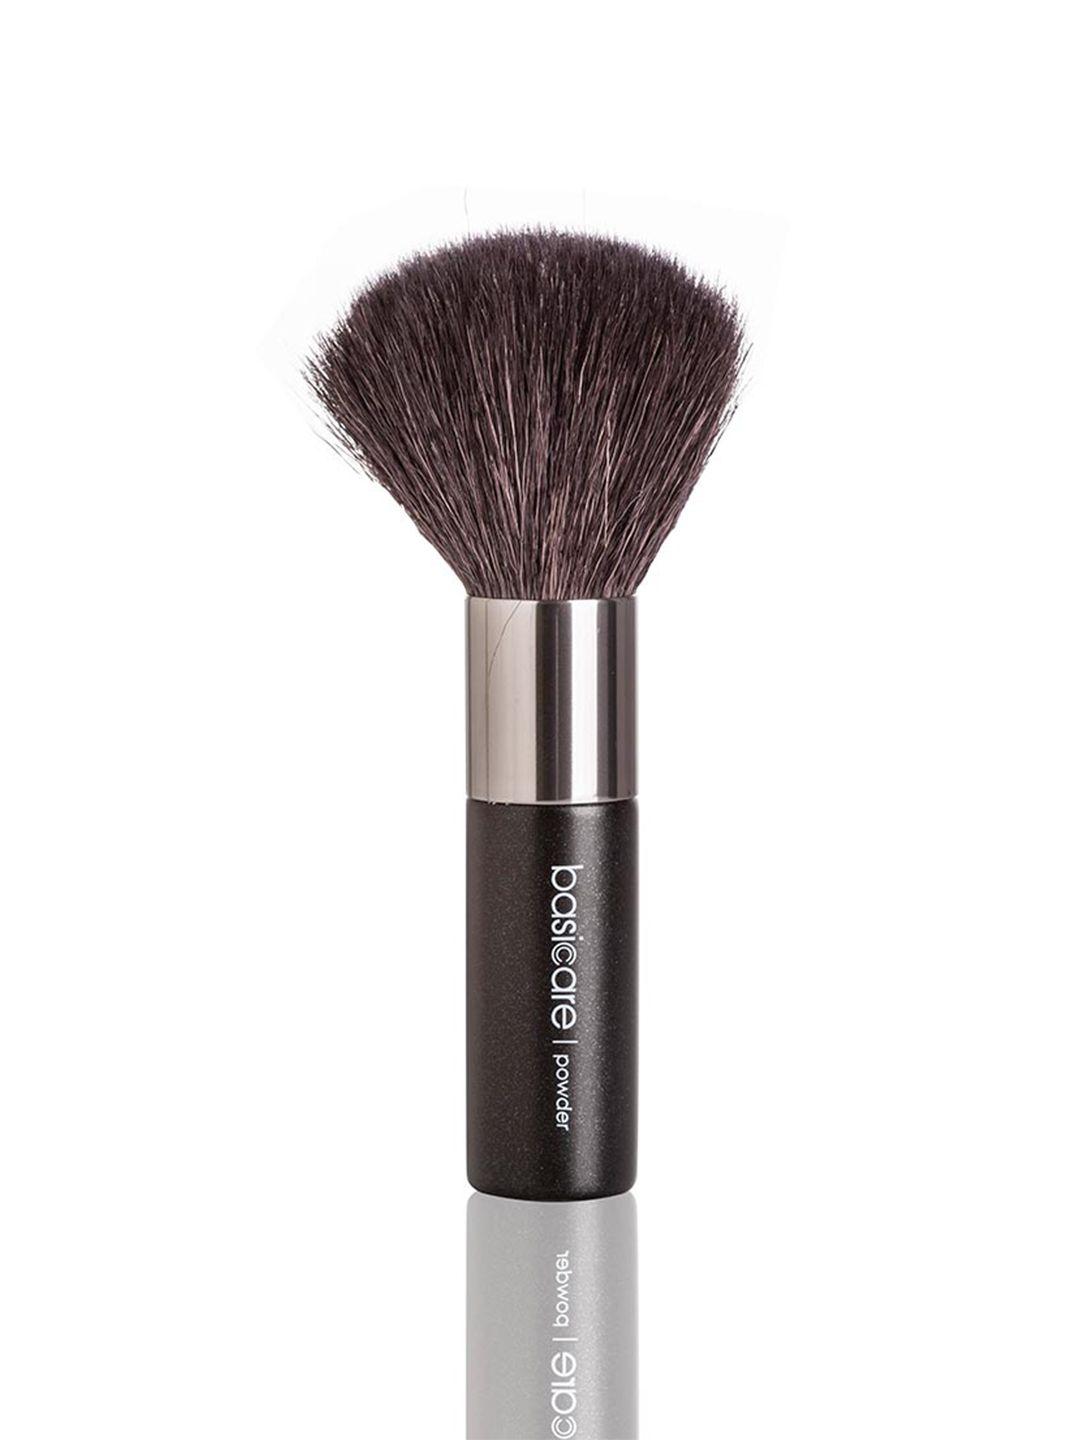 basicare compact powder makeup brush